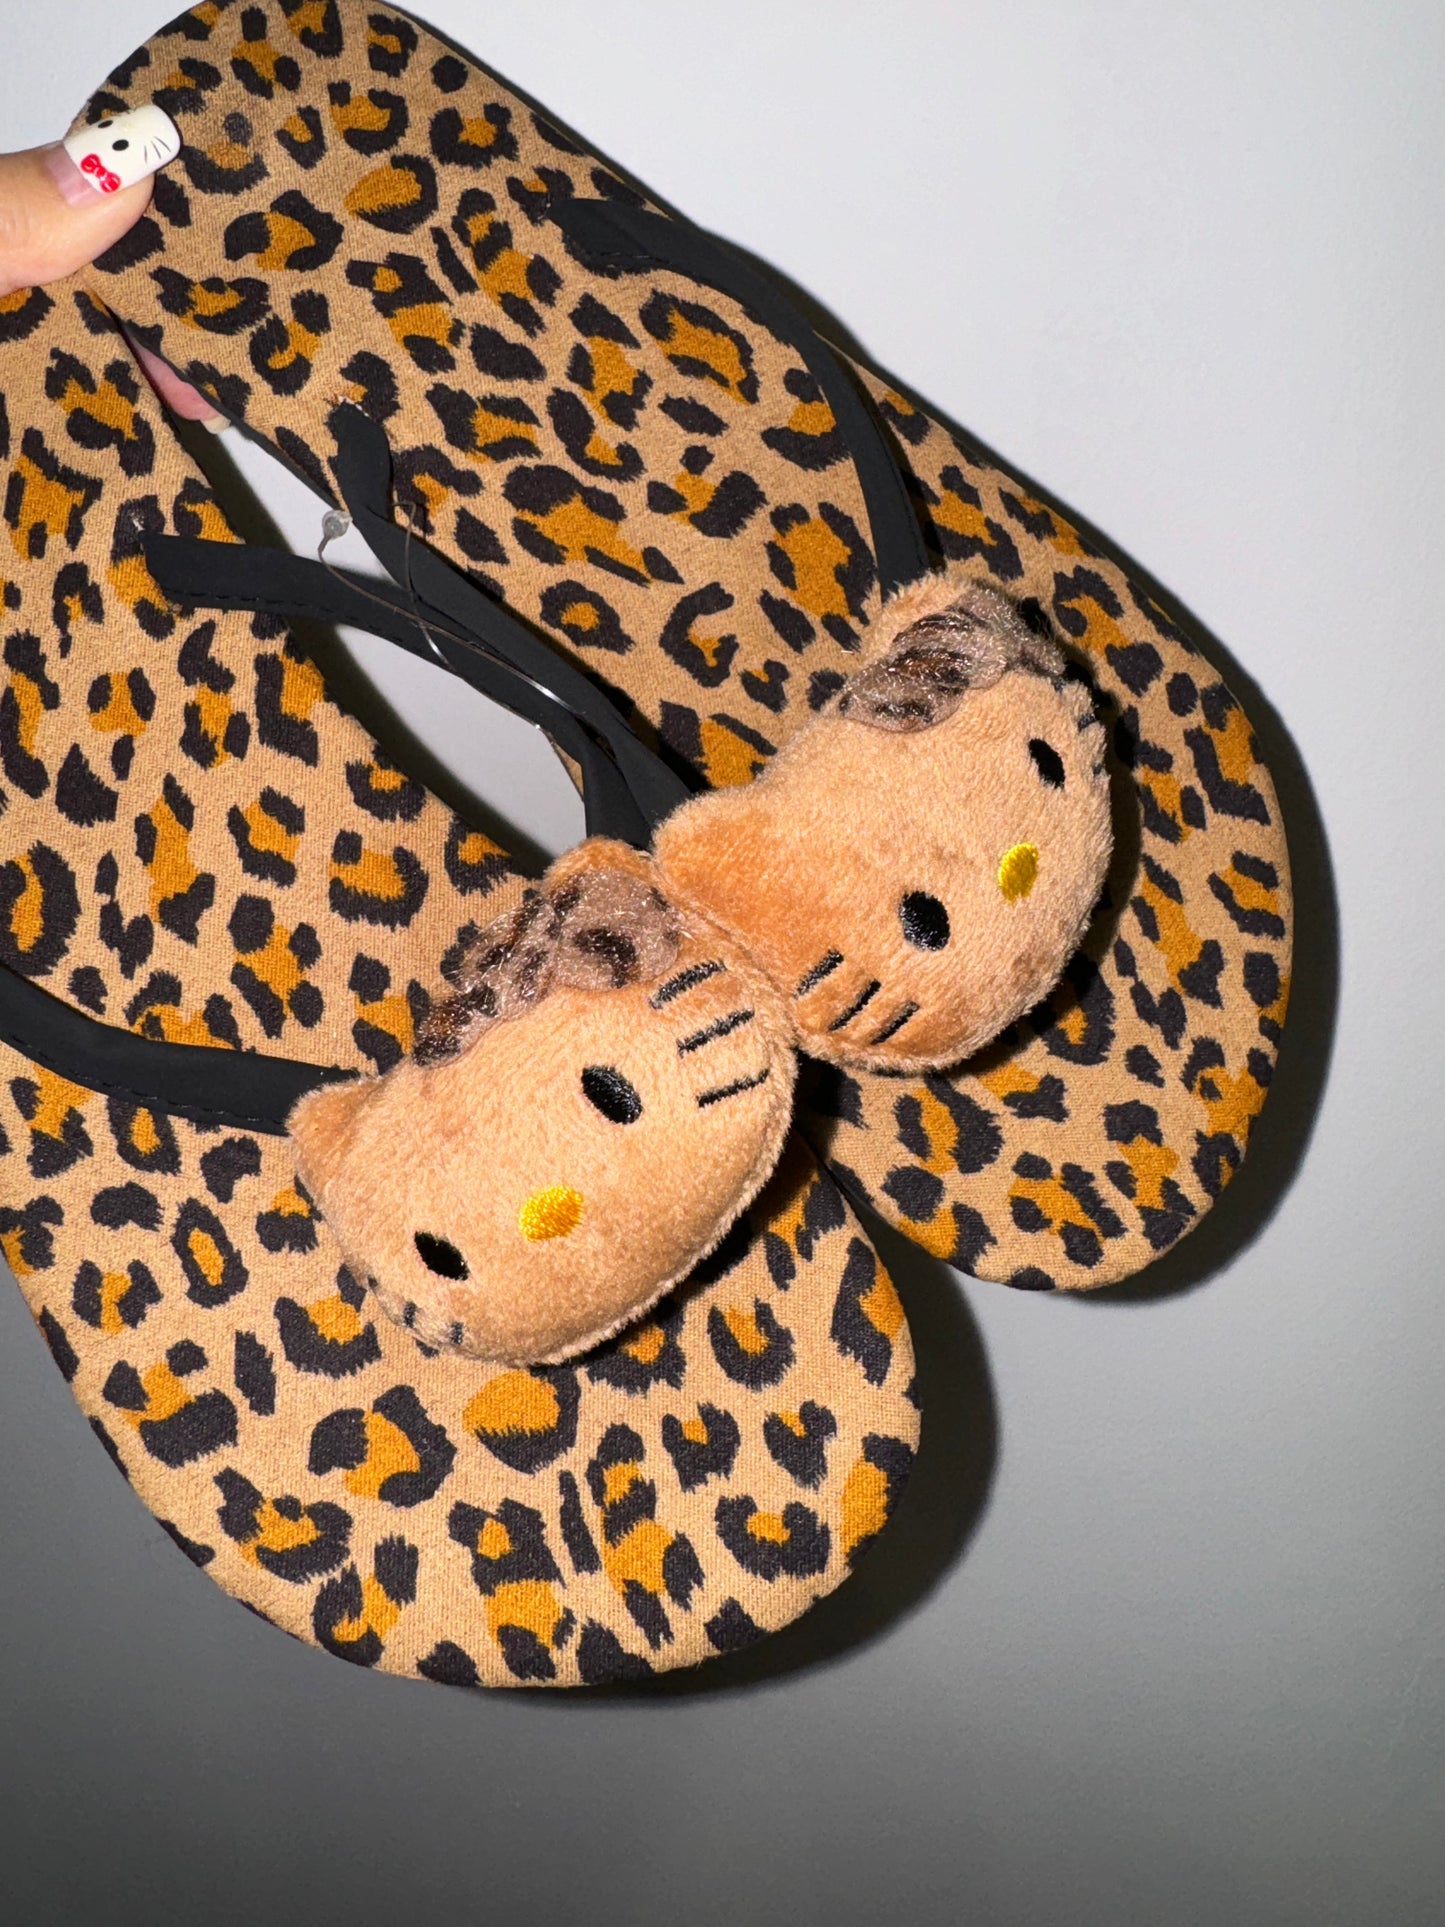 Hellokitty Leopard Print Flip Flops Beach Shoe